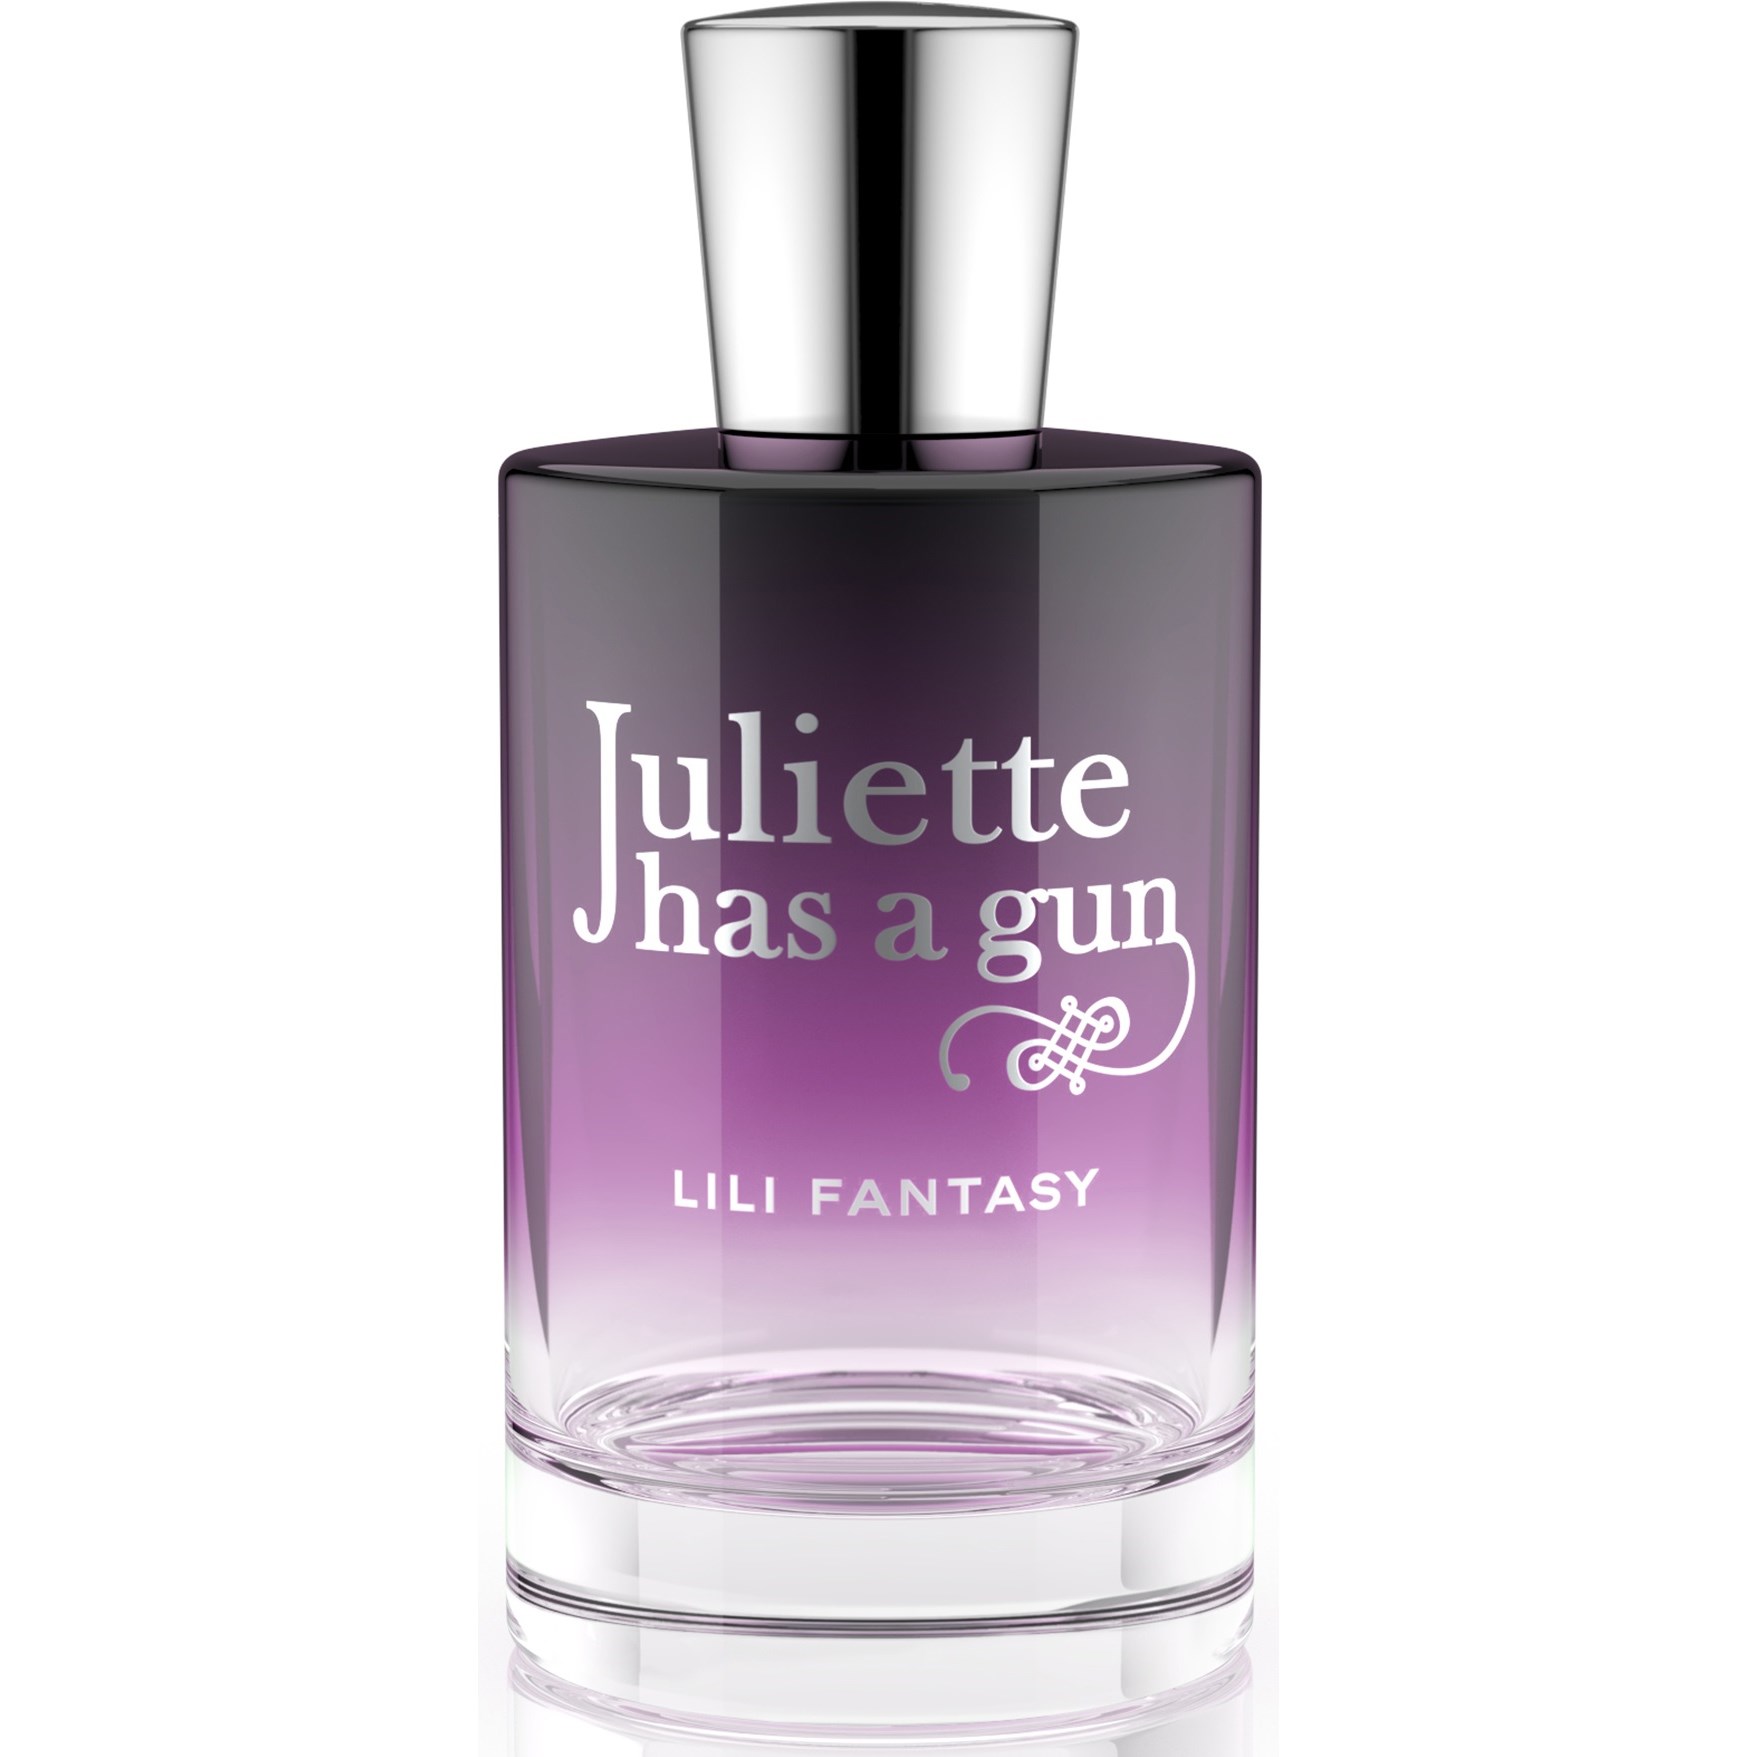 Zdjęcia - Perfuma damska Juliette Has a Gun Eau De Parfum Lili Fantasy - woda perfumowana 